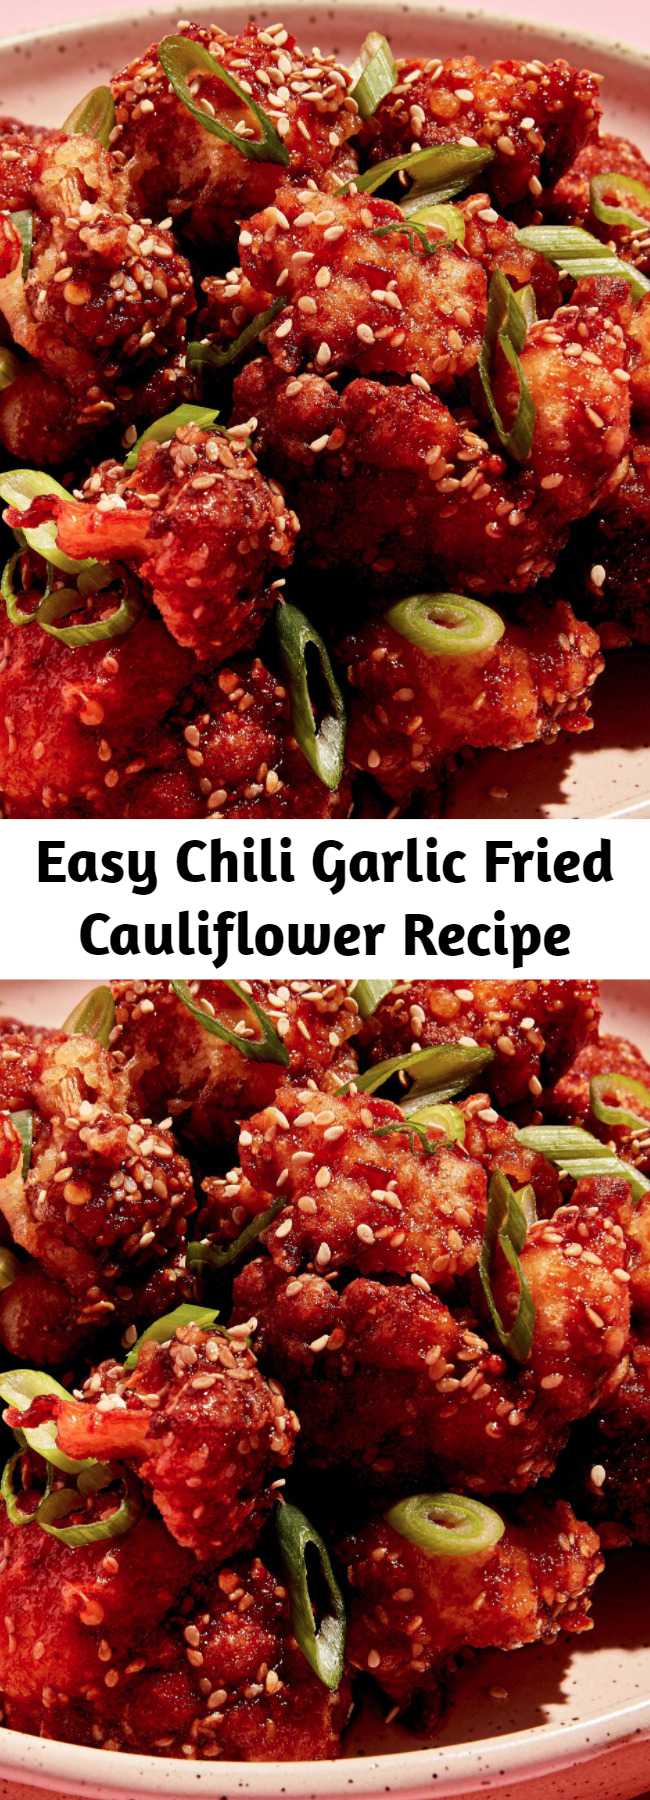 Easy Chili Garlic Fried Cauliflower Recipe - Go ahead and double this Chili Garlic Fried Cauliflower recipe and you'll have no regrets. #food #easyrecipe #vegetarian #familydinner #dinner